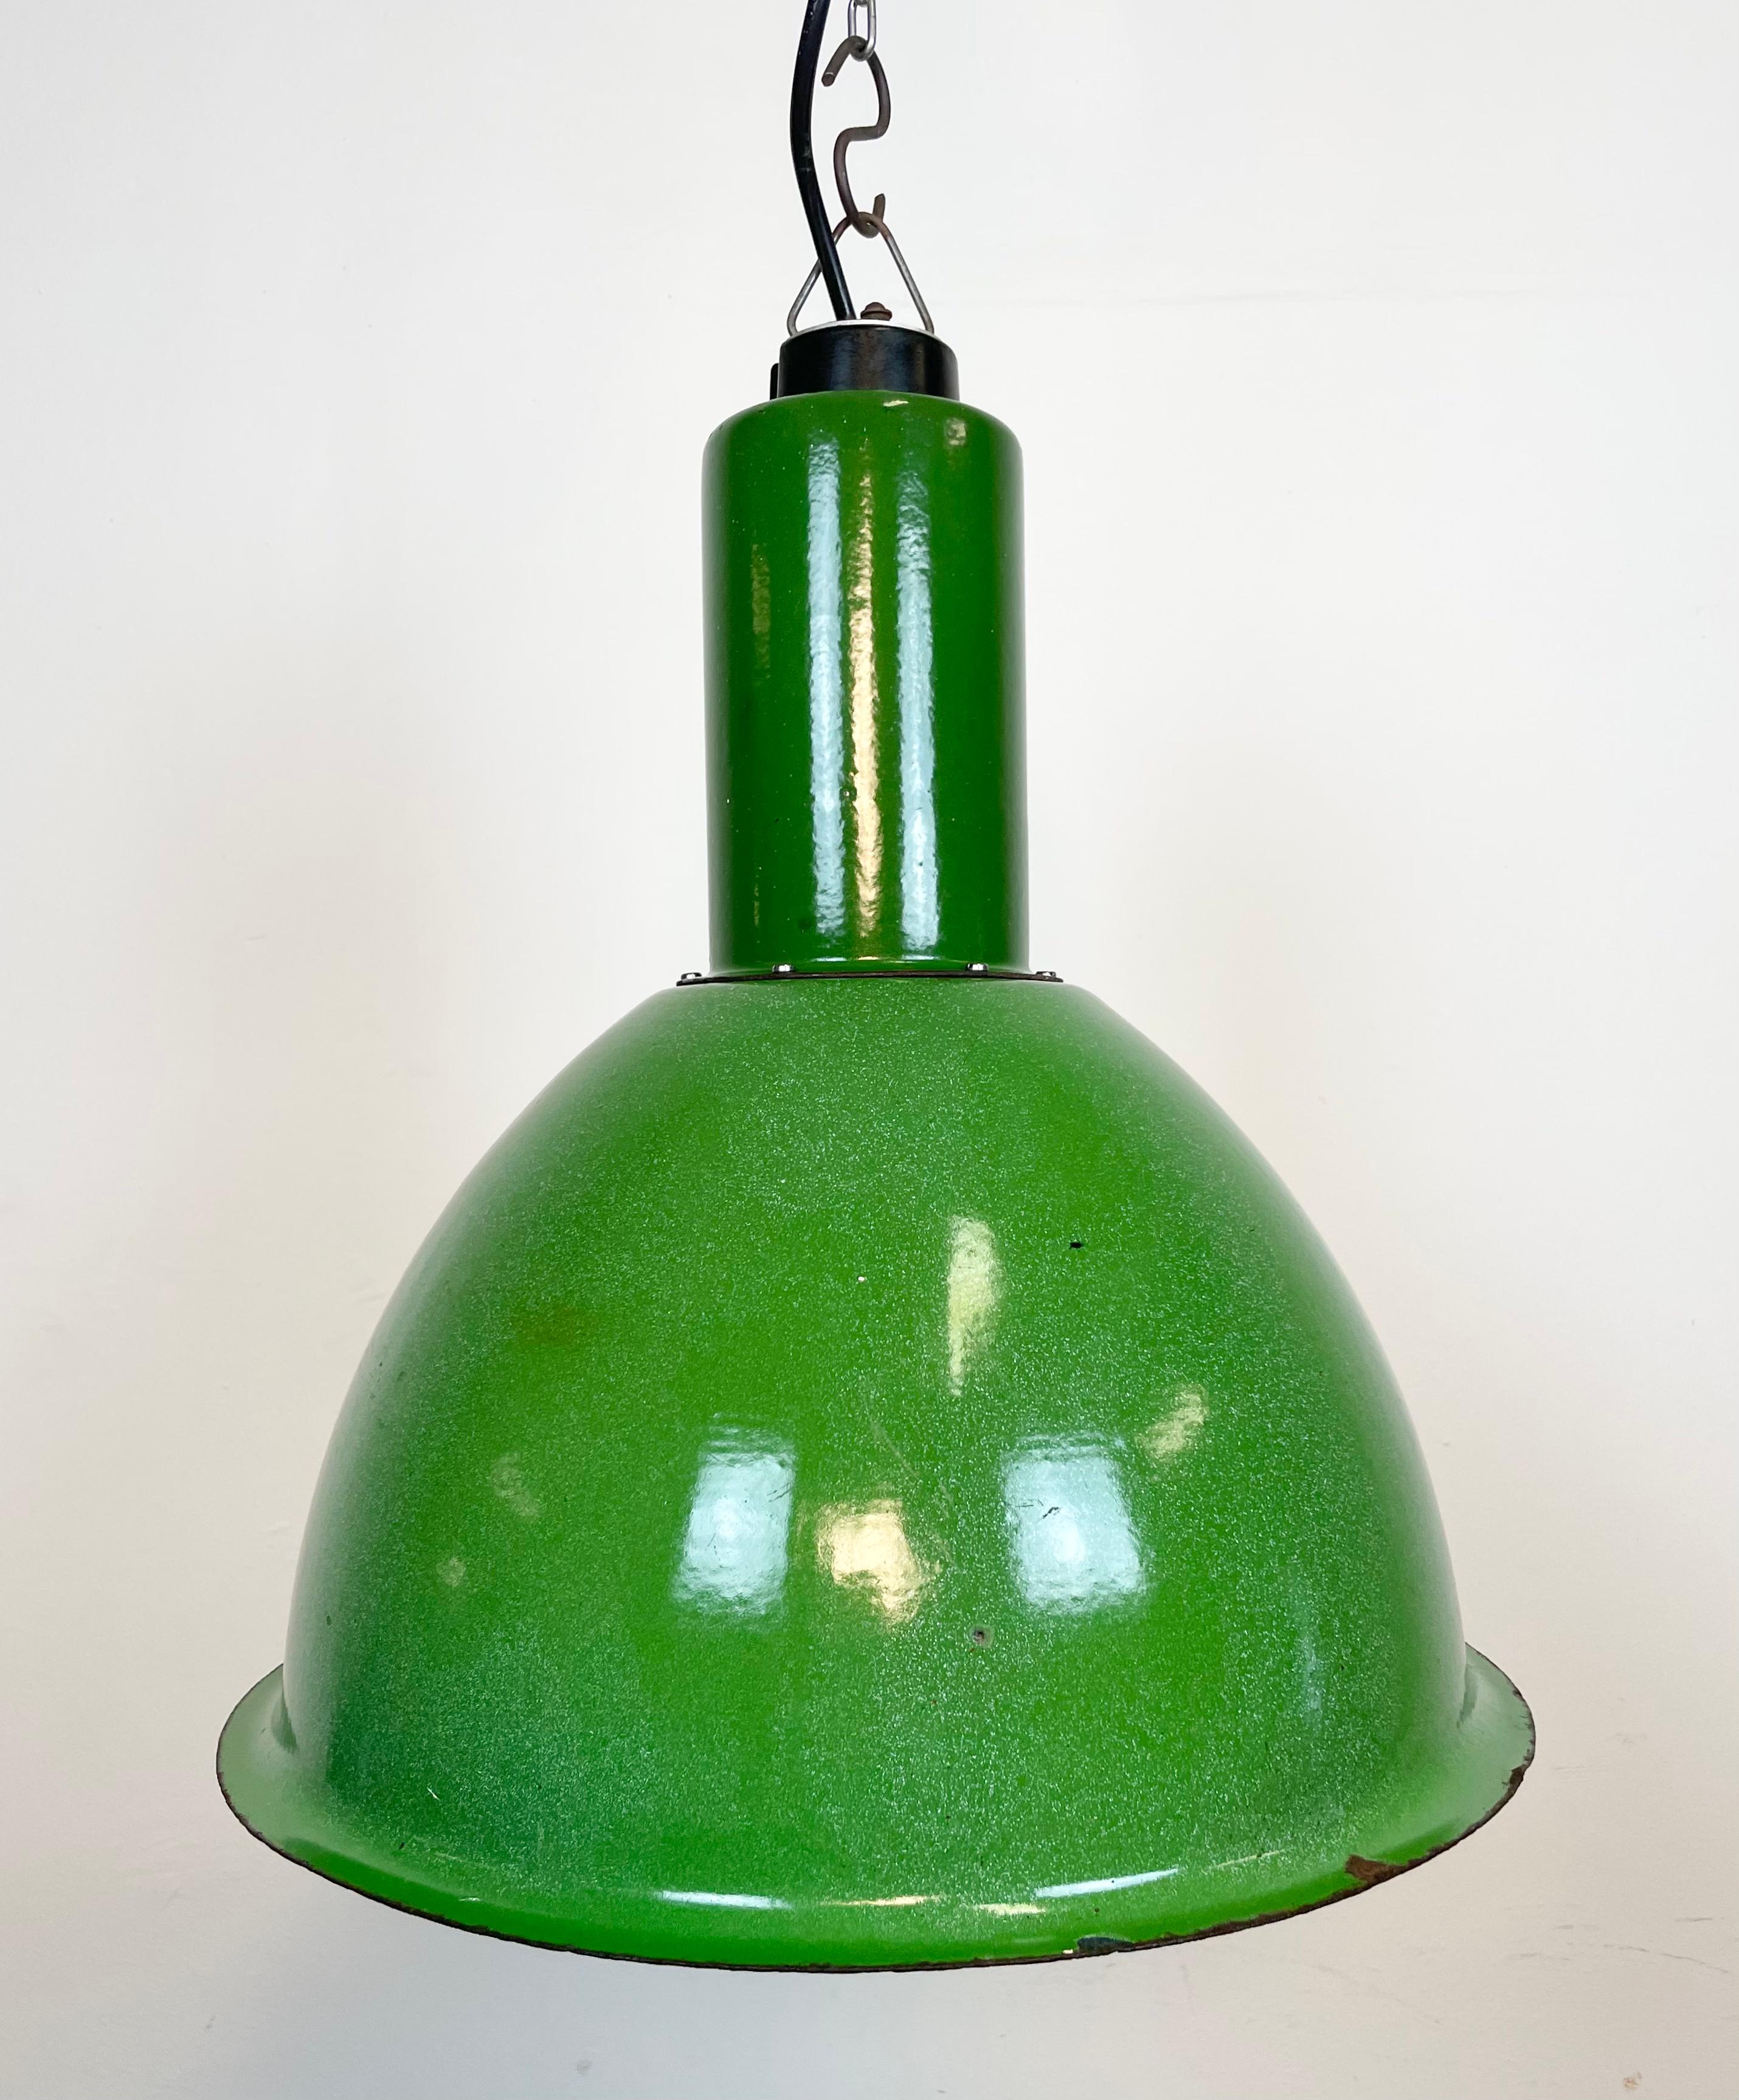 - Vintage Industrial light from the 1960s 
- Made in former Soviet Union
- Green enamel body
- White enamel inside the shade
- Bakelite top 
- Socket requires E 27/ E26 lightbulbs 
- New wire 
- Lampshade diameter: 40 cm
- Weight : 3,2 kg.